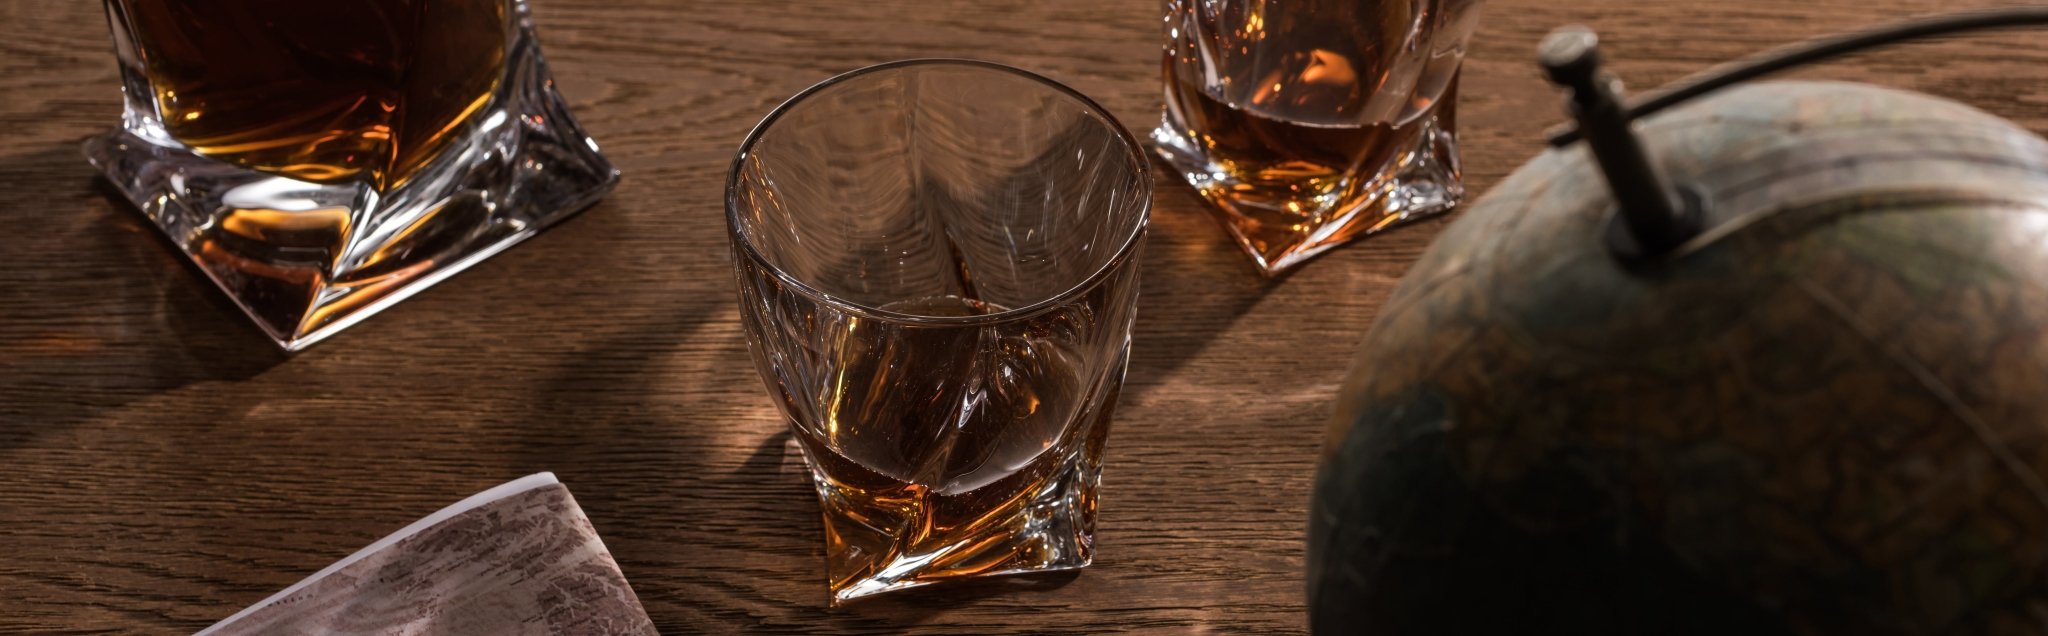 Blended Scotch Whisky - CG Liquor